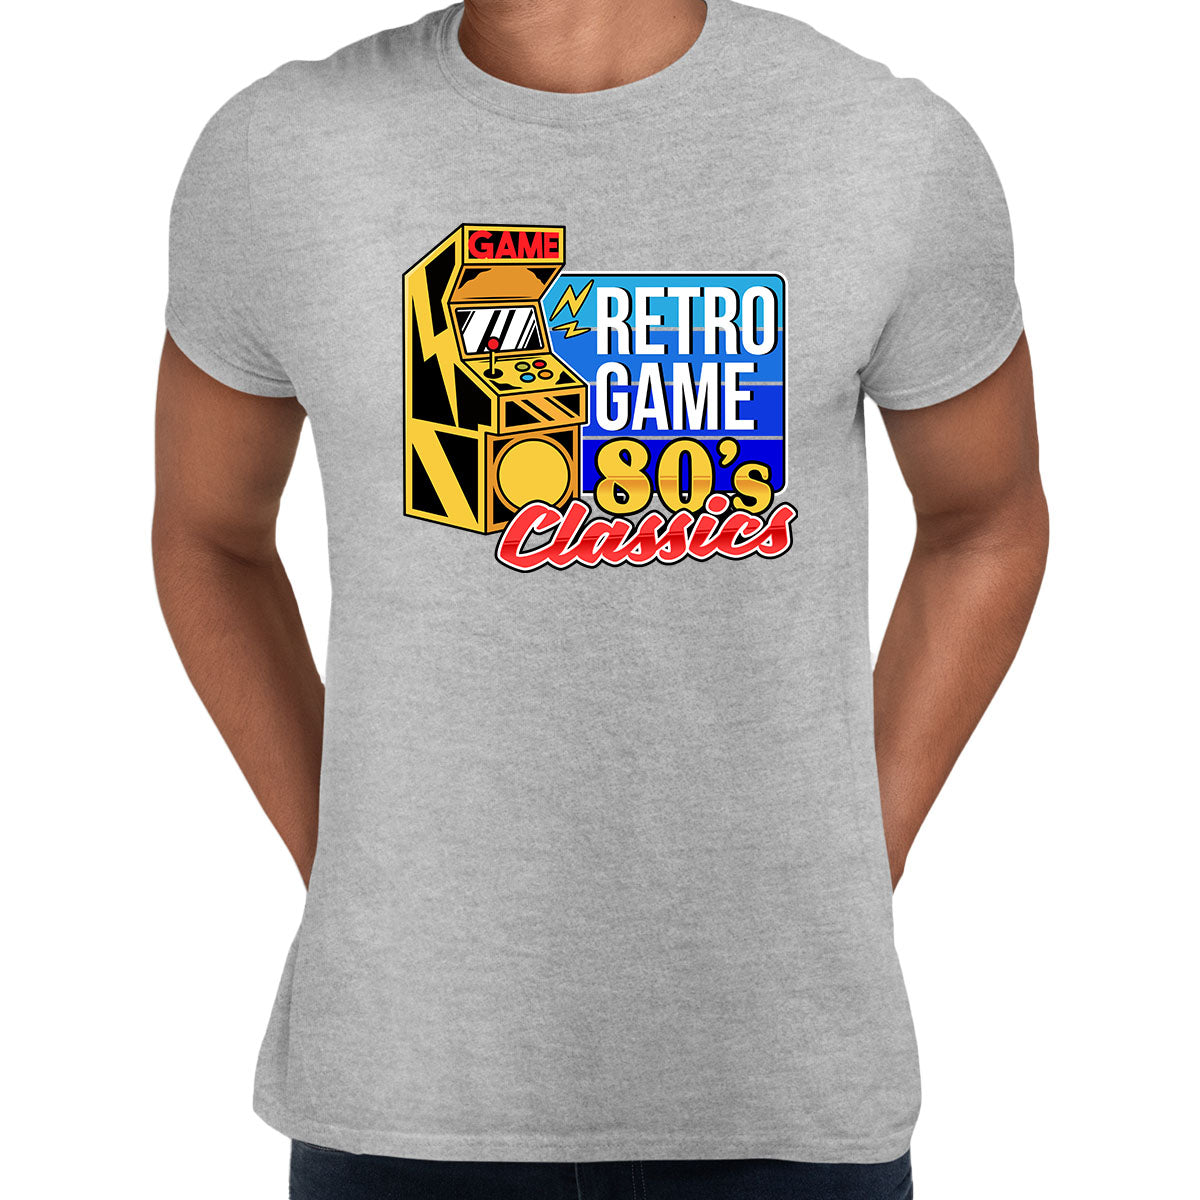 Retro Game 80's Collection Six Retro Game Classics Typography Unisex T-shirt - Kuzi Tees